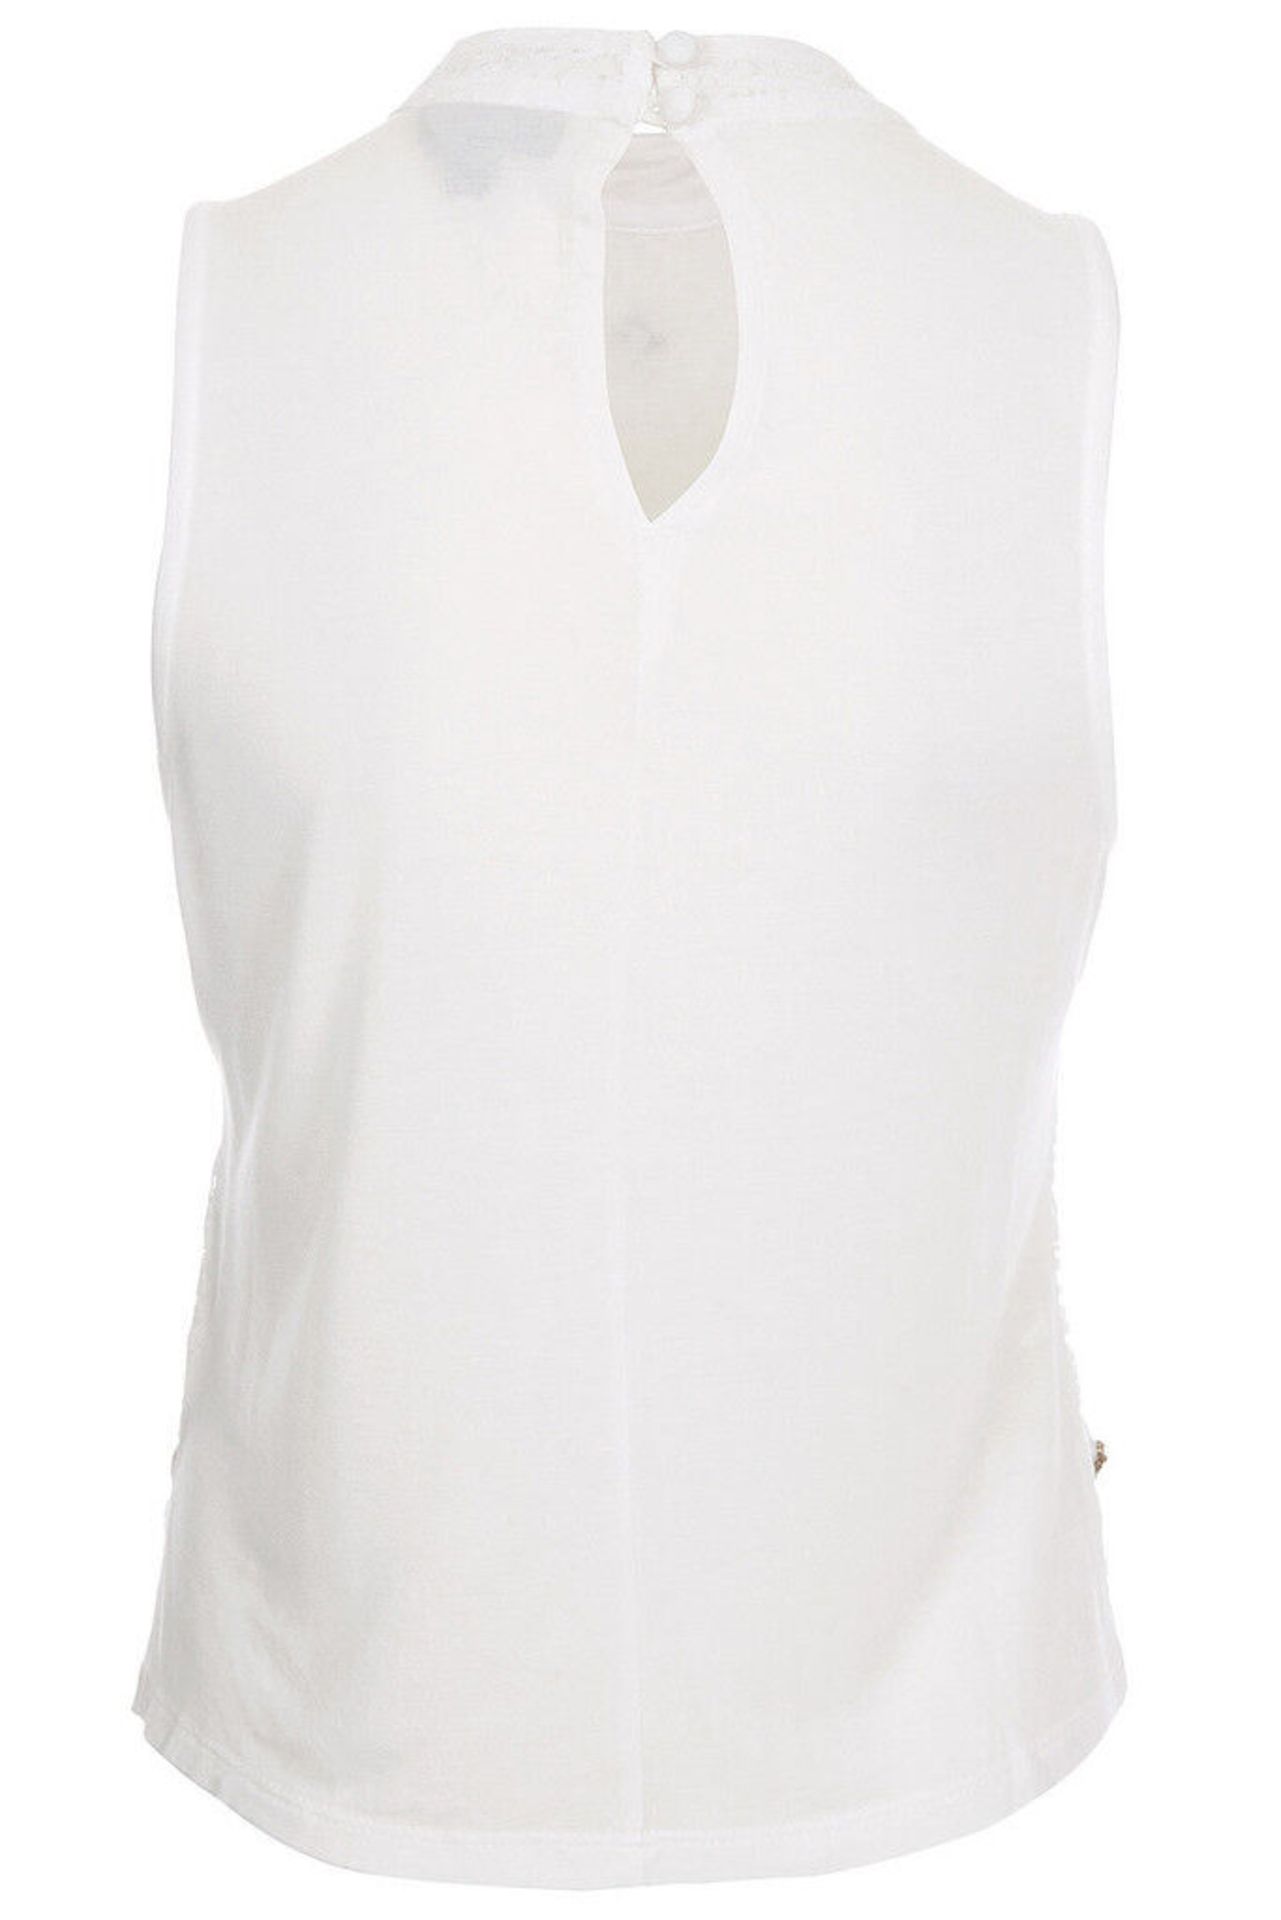 Topshop Women's Sleeveless White Lace Top Size 6 8 10 12 Pack Size 100 - Bild 3 aus 4